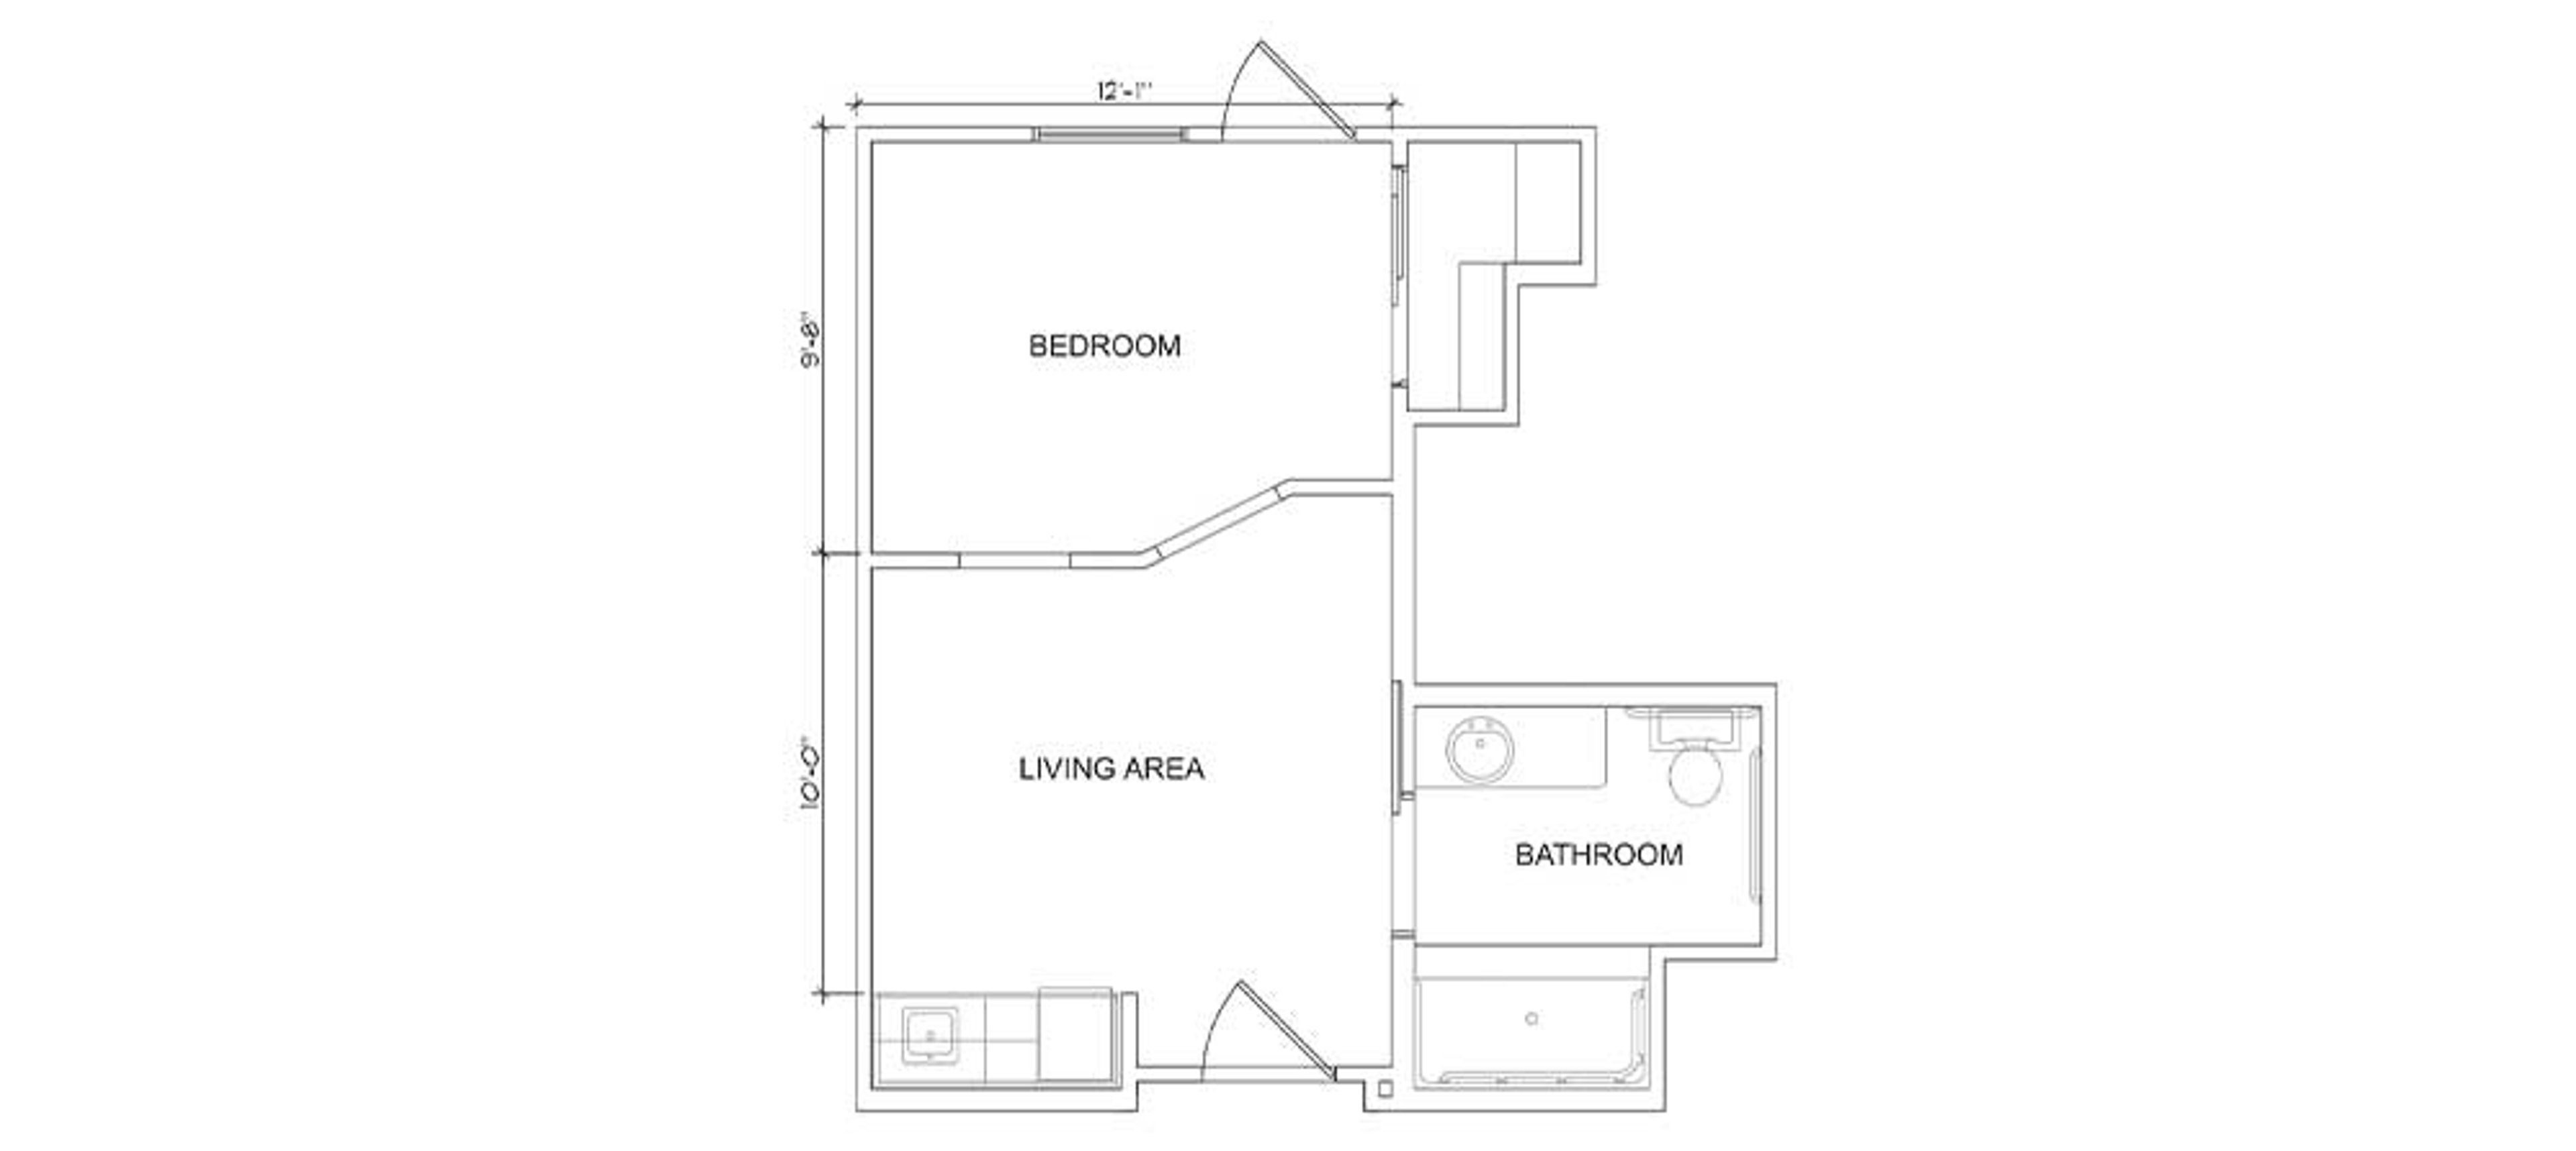 Floorplan - Walnut Creek - 1 bed, 1 bath, Courtyard Assisted Living